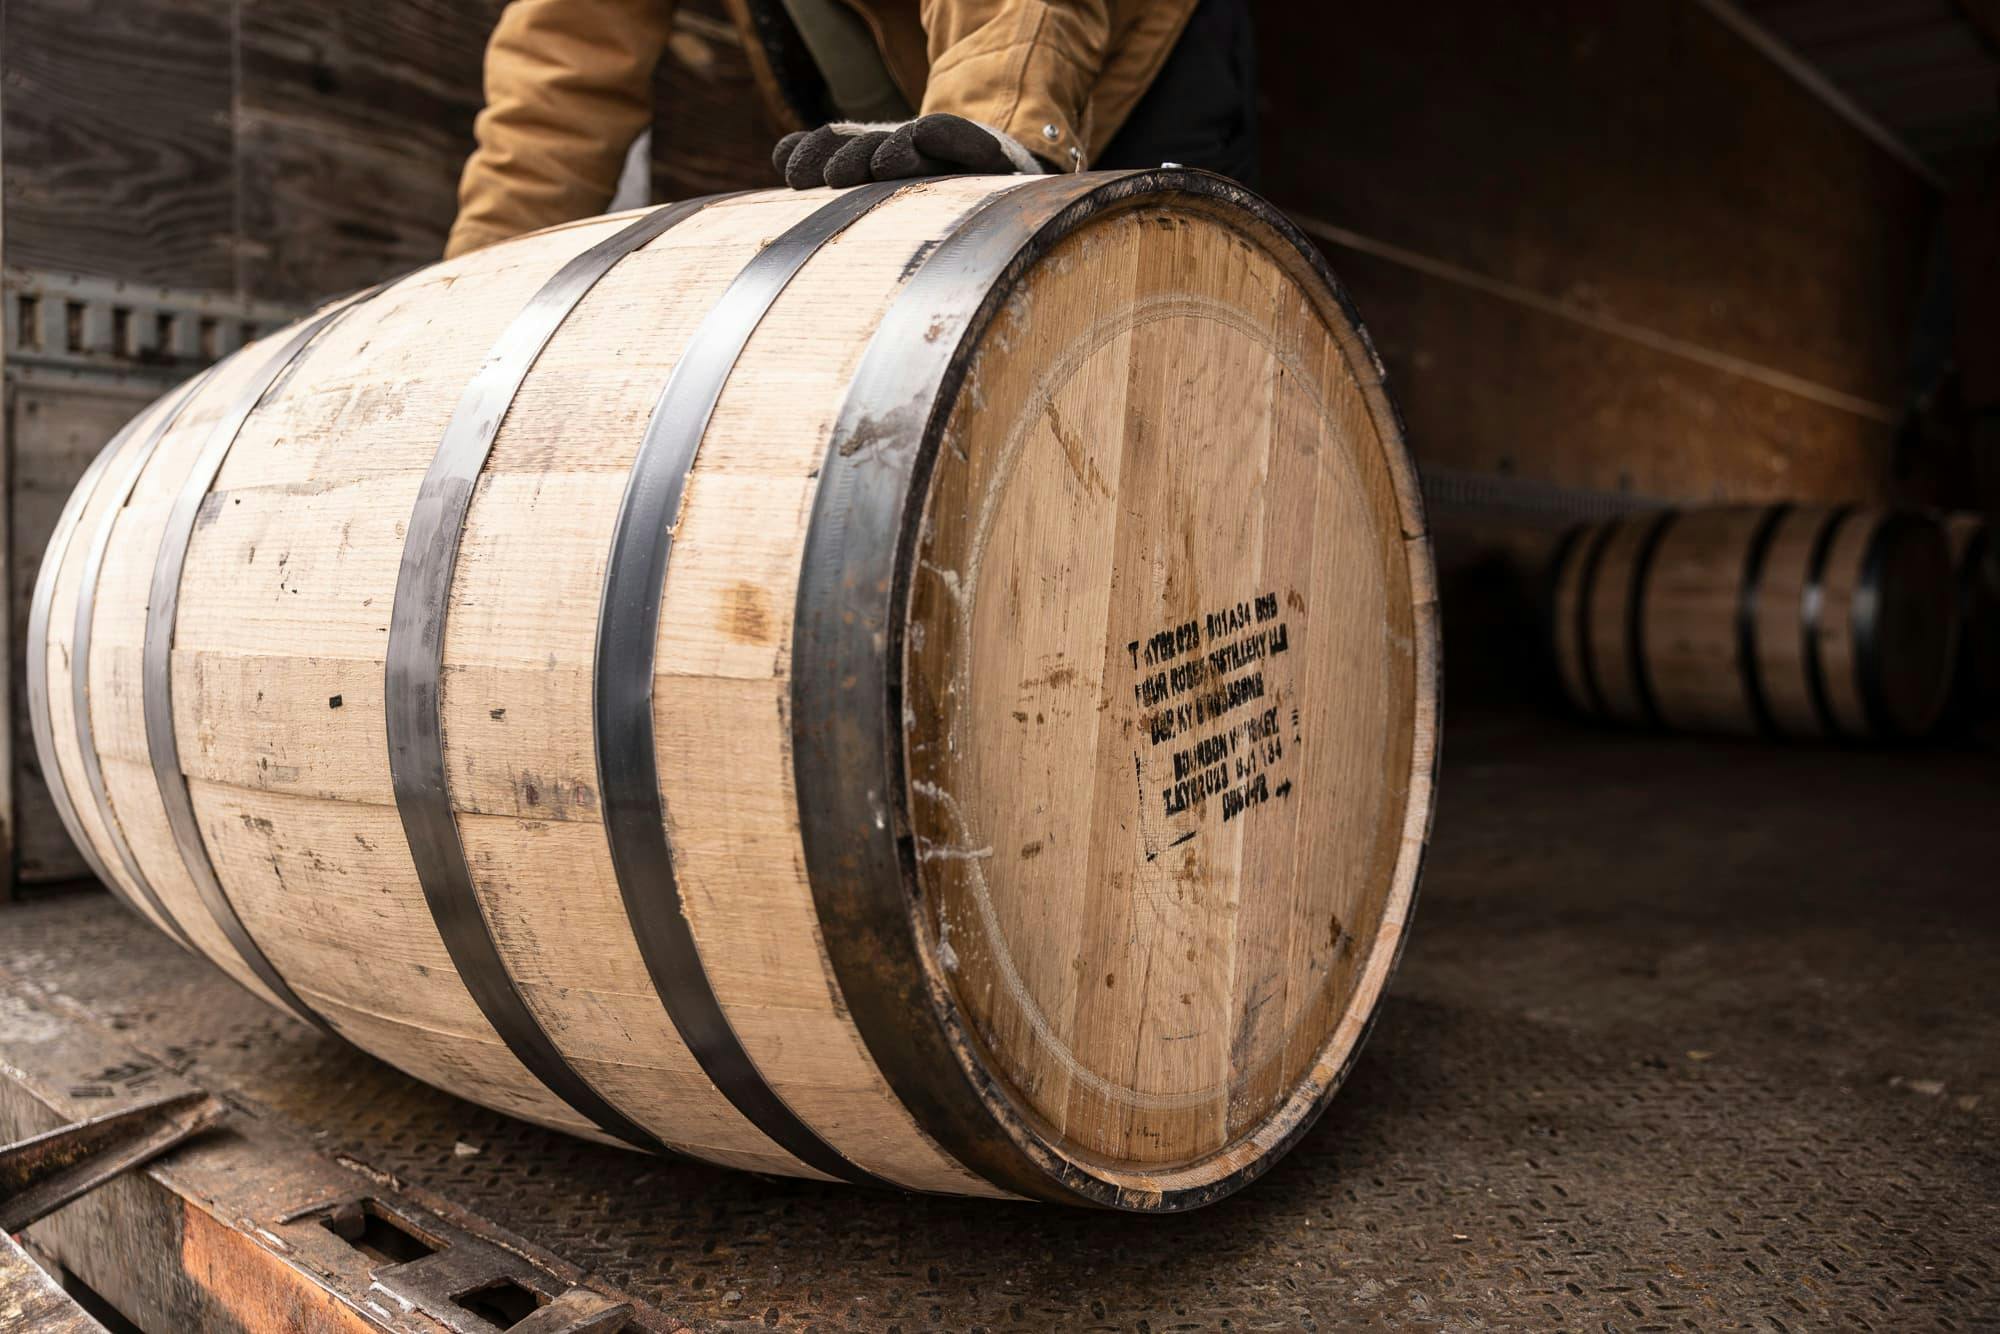 Four Roses team rolling a barrel of bourbon